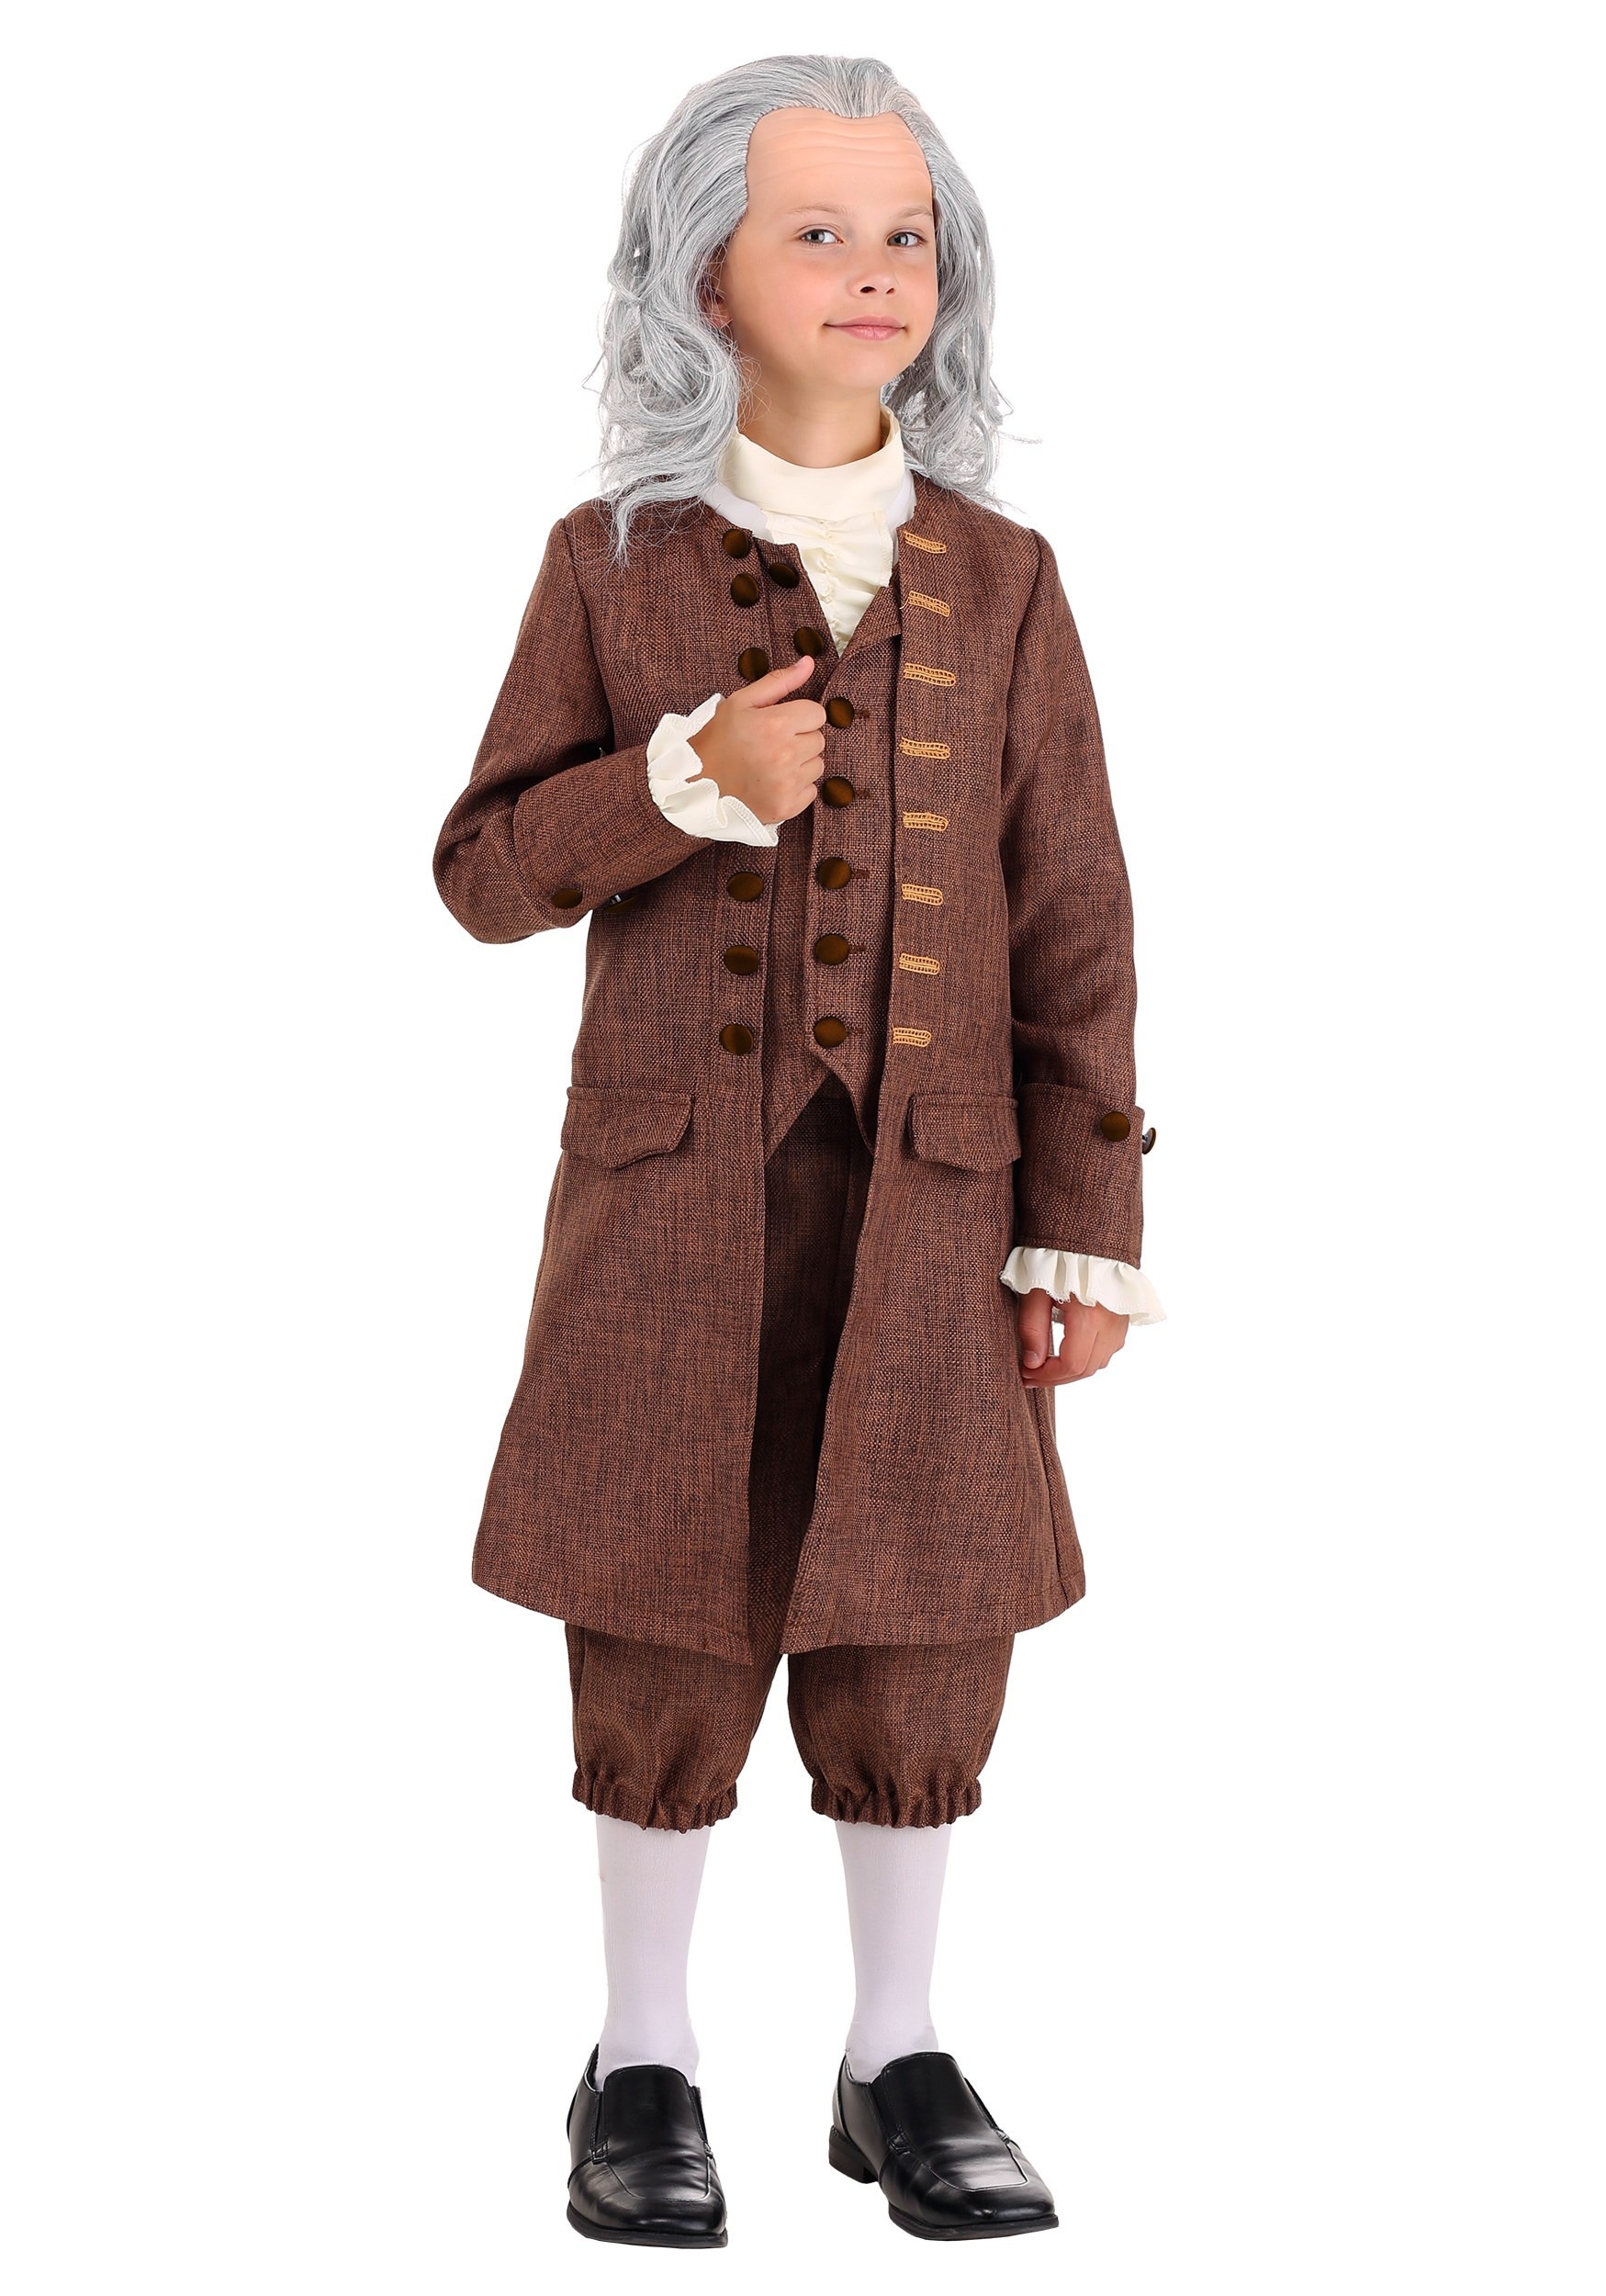 Photos - Fancy Dress Crosman FUN Costumes Colonial Benjamin Franklin Boy's Costume | Historical Costume 